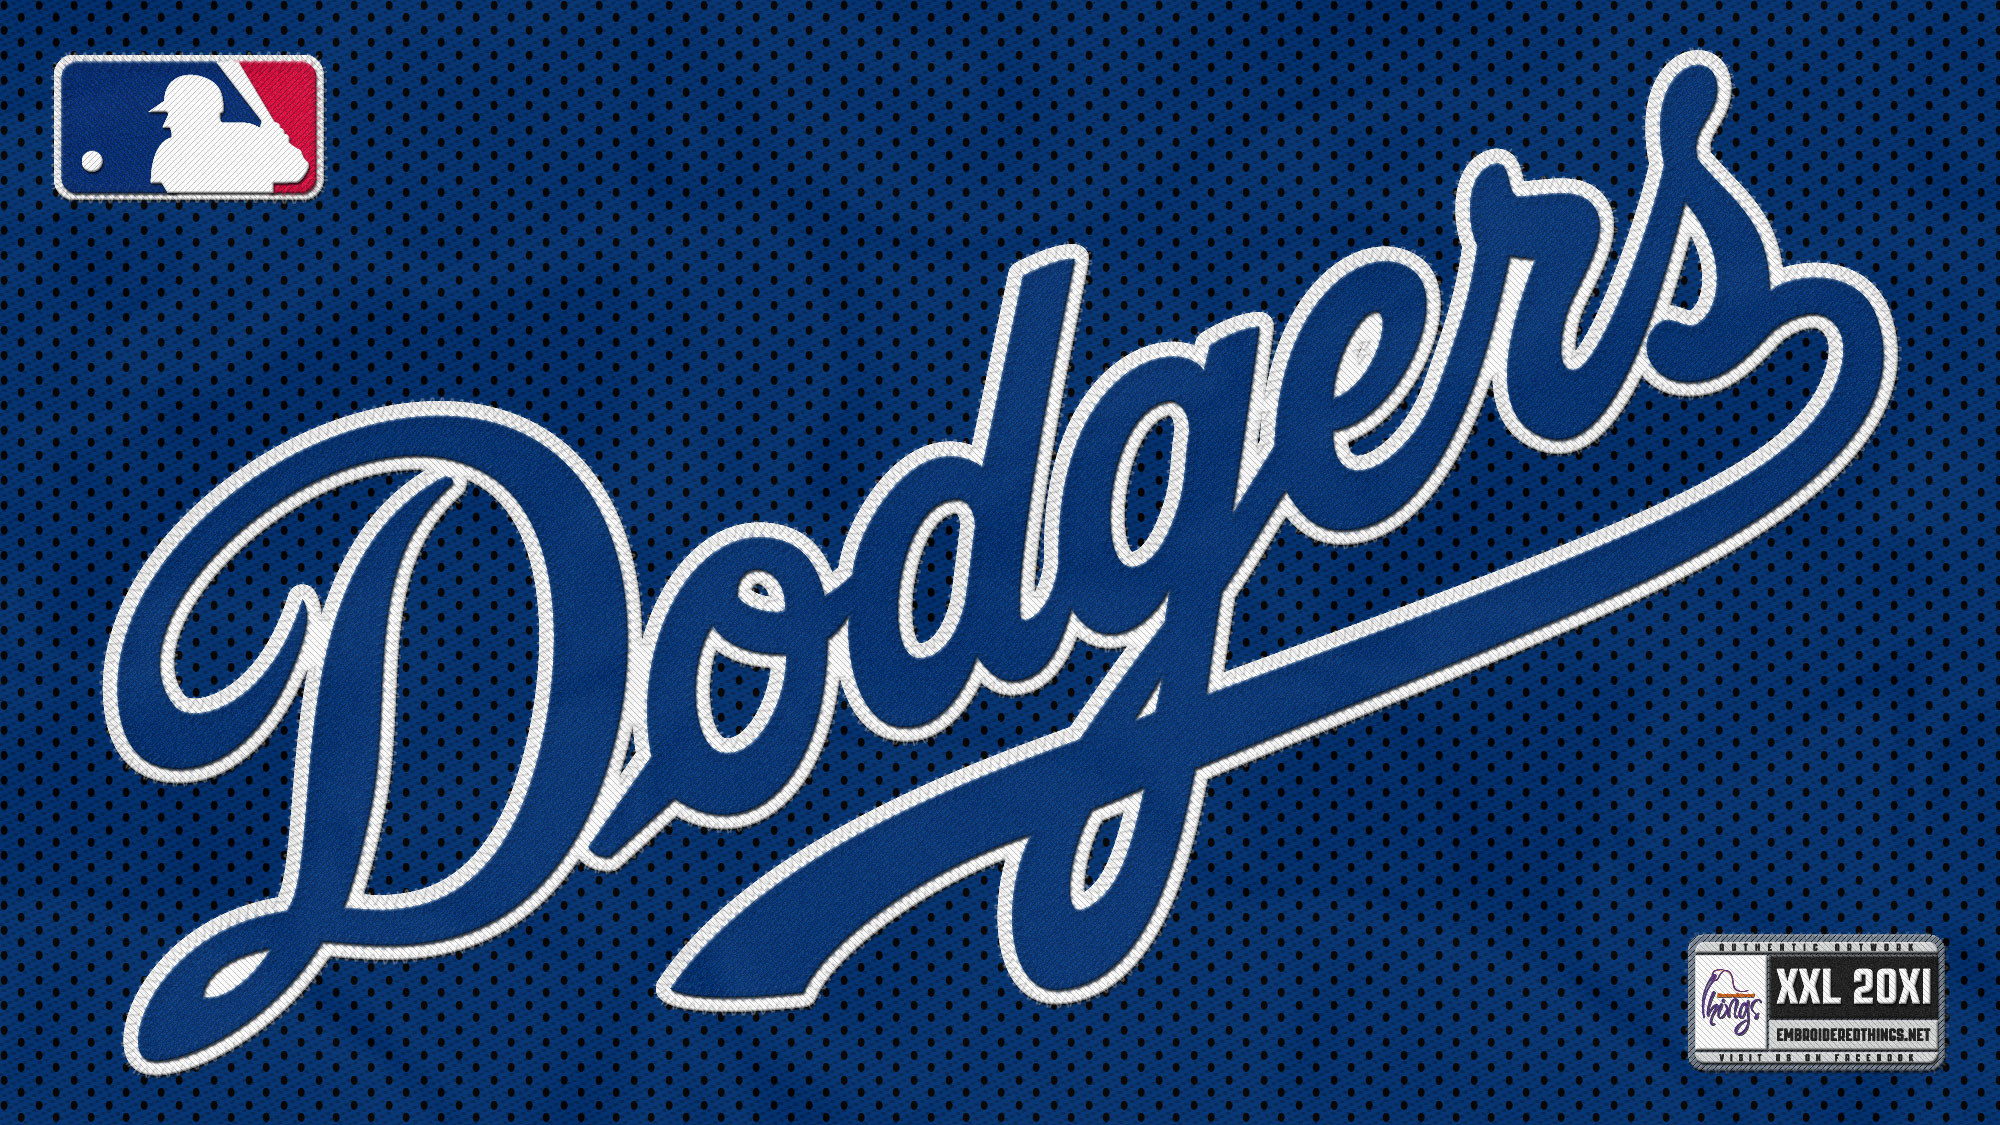 2000x1125 los angeles dodgers logo wallpaper Best Pictures Los Angeles Dodgers Sign